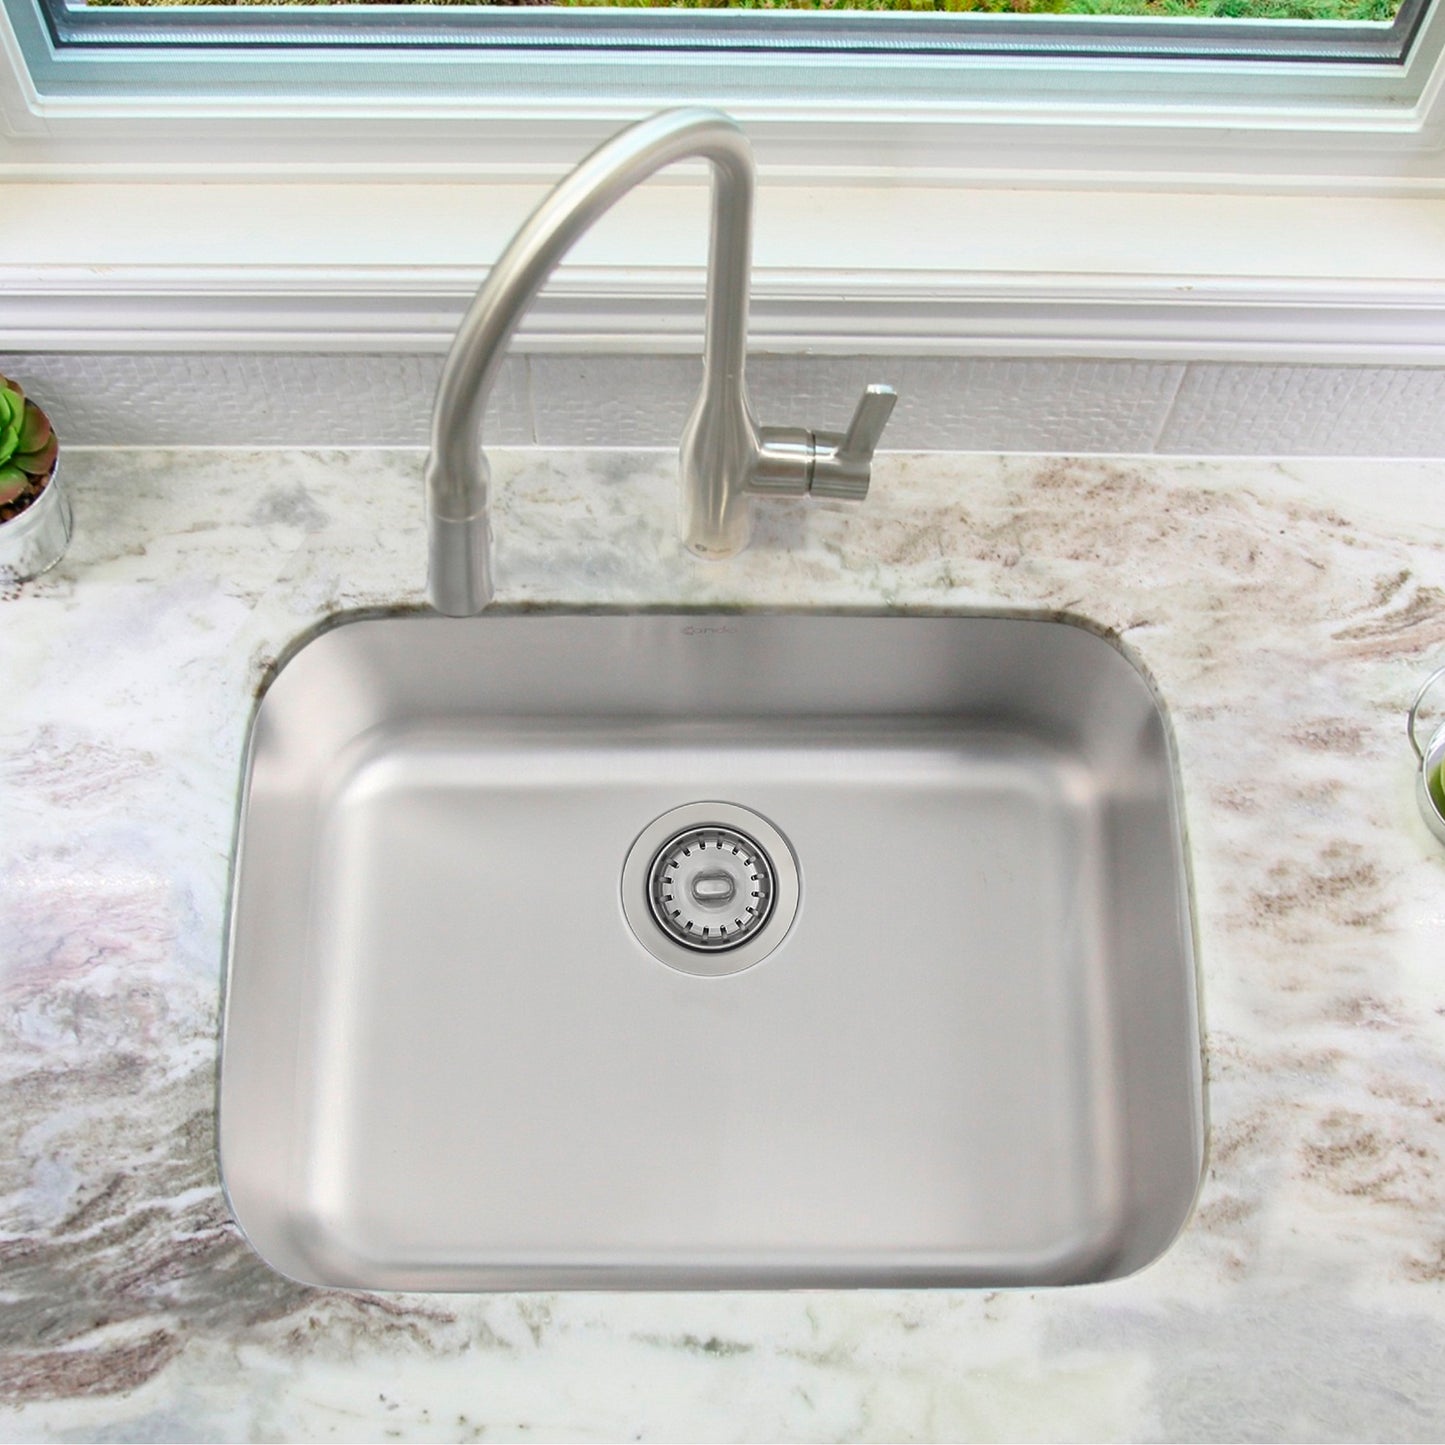 STYLISH 23" Garnet Single Bowl Undermount and Drop-in Stainless Steel Kitchen Sink